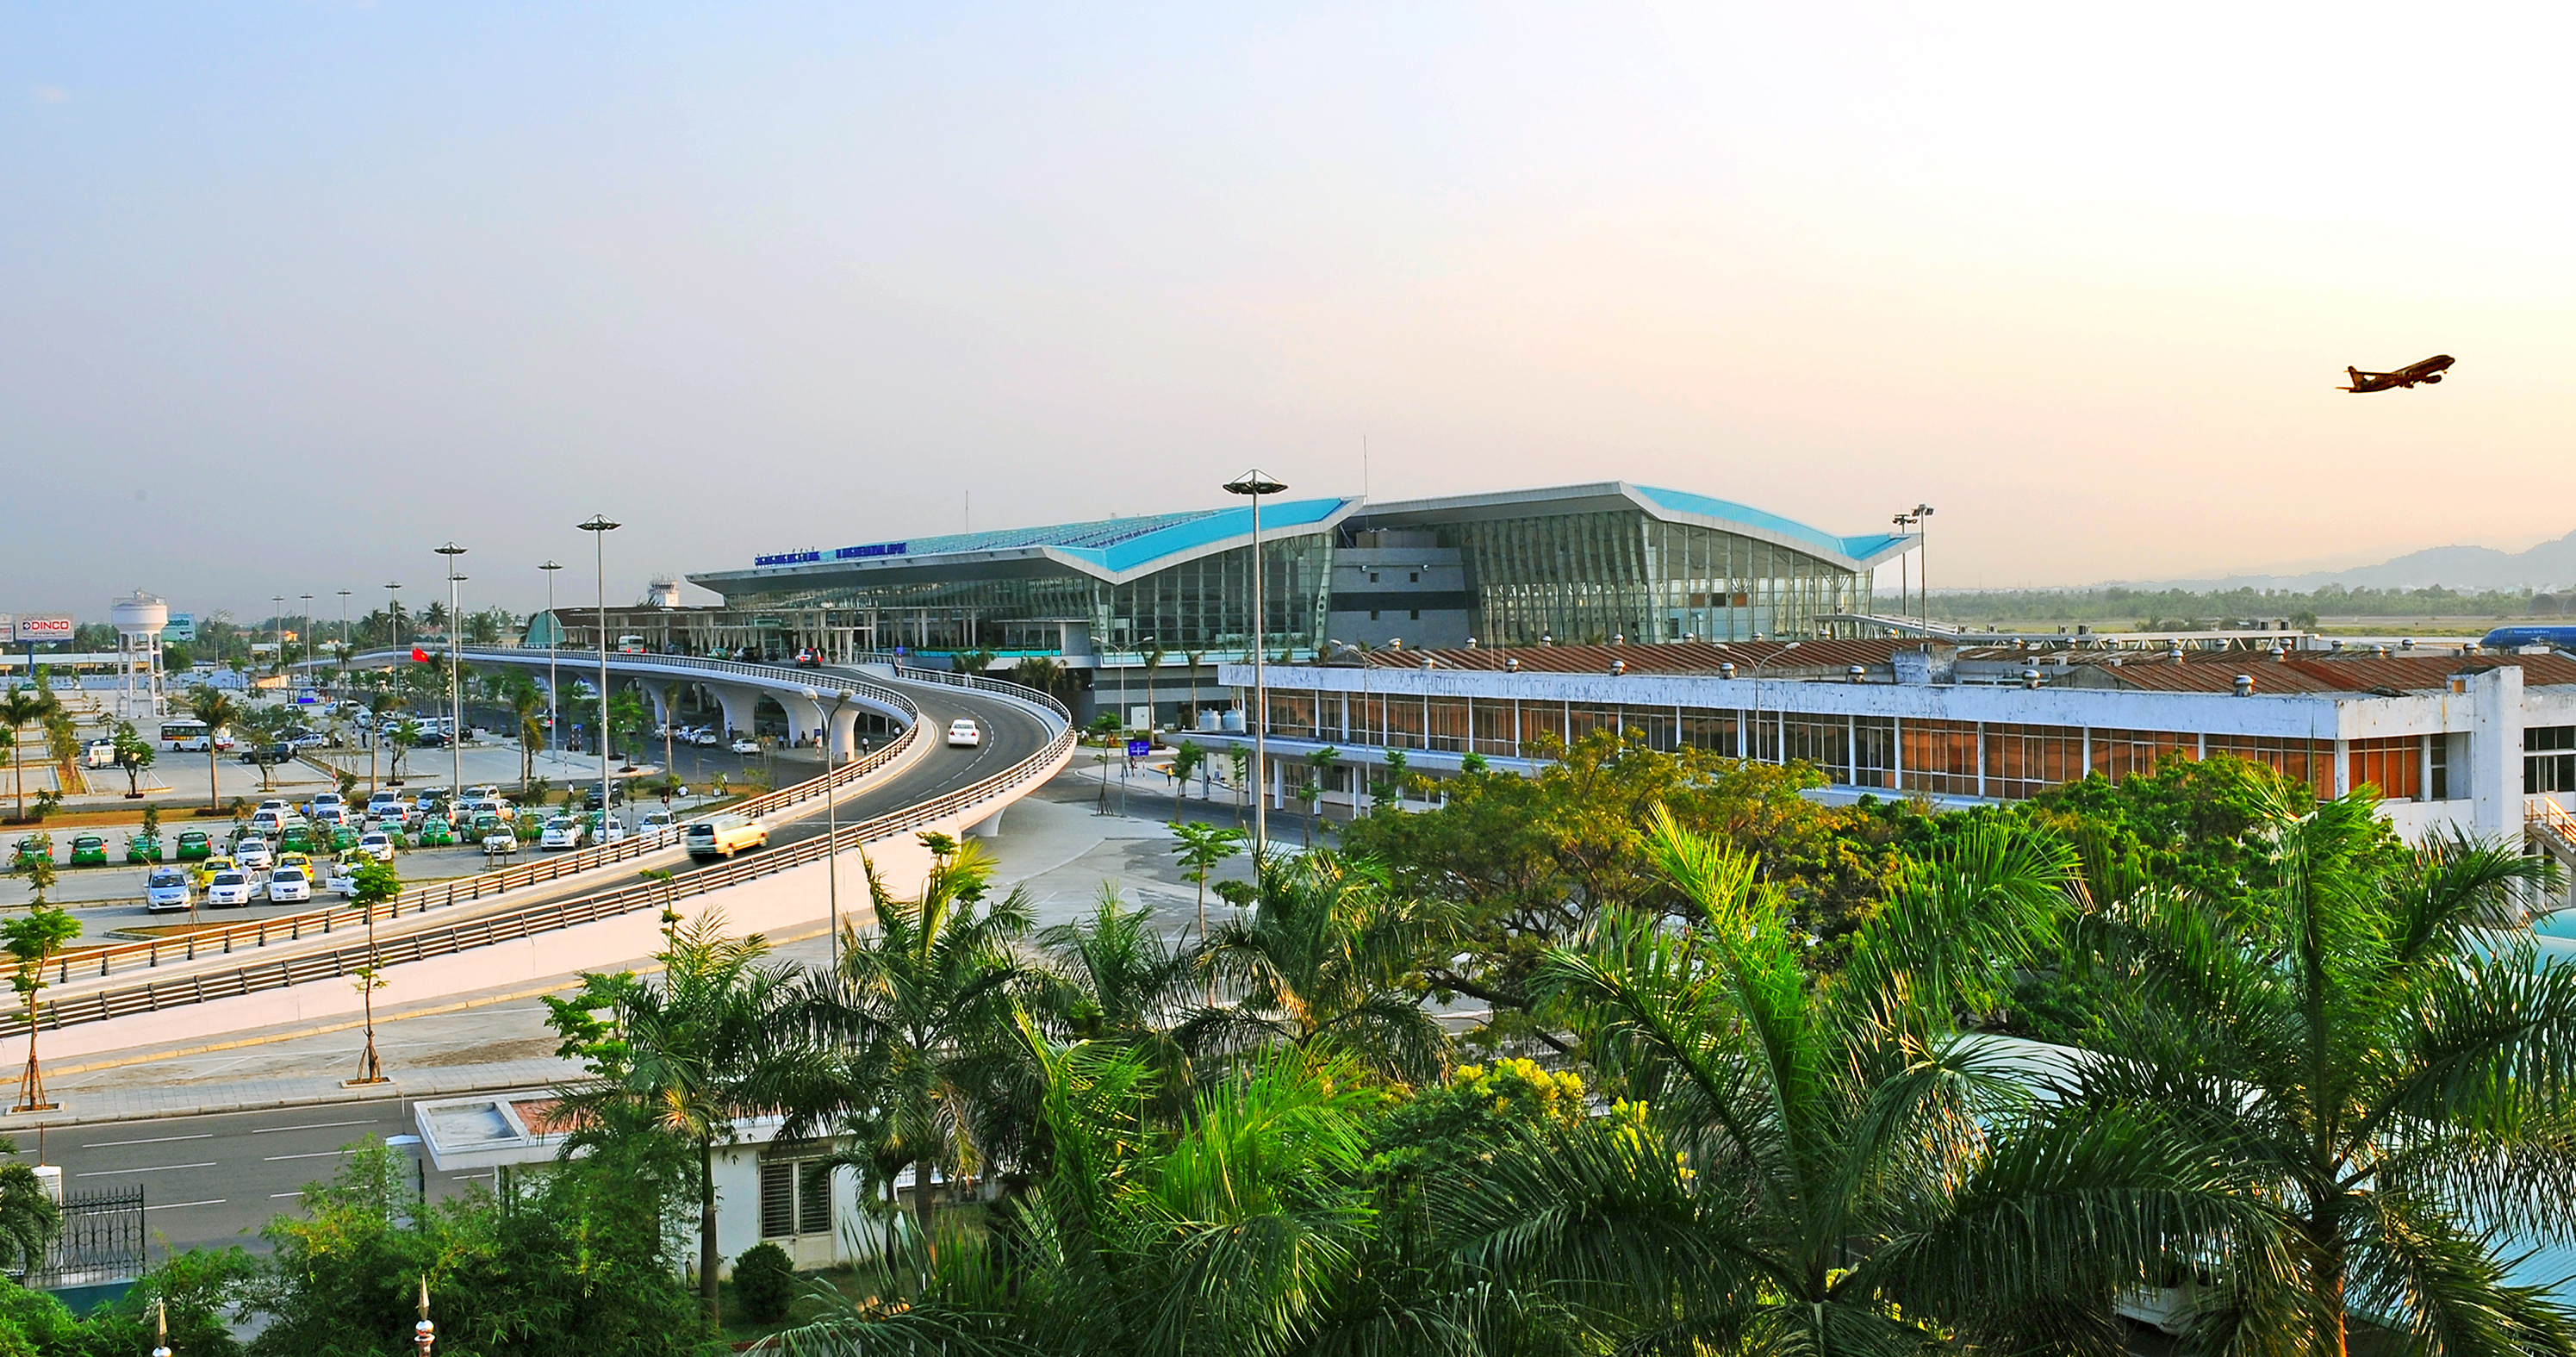 https://www.vietnamairport.vn/uploads/users/3ca2050a3bf3de4a027e/images/danangairport/Danang_Airport_Overview.jpg